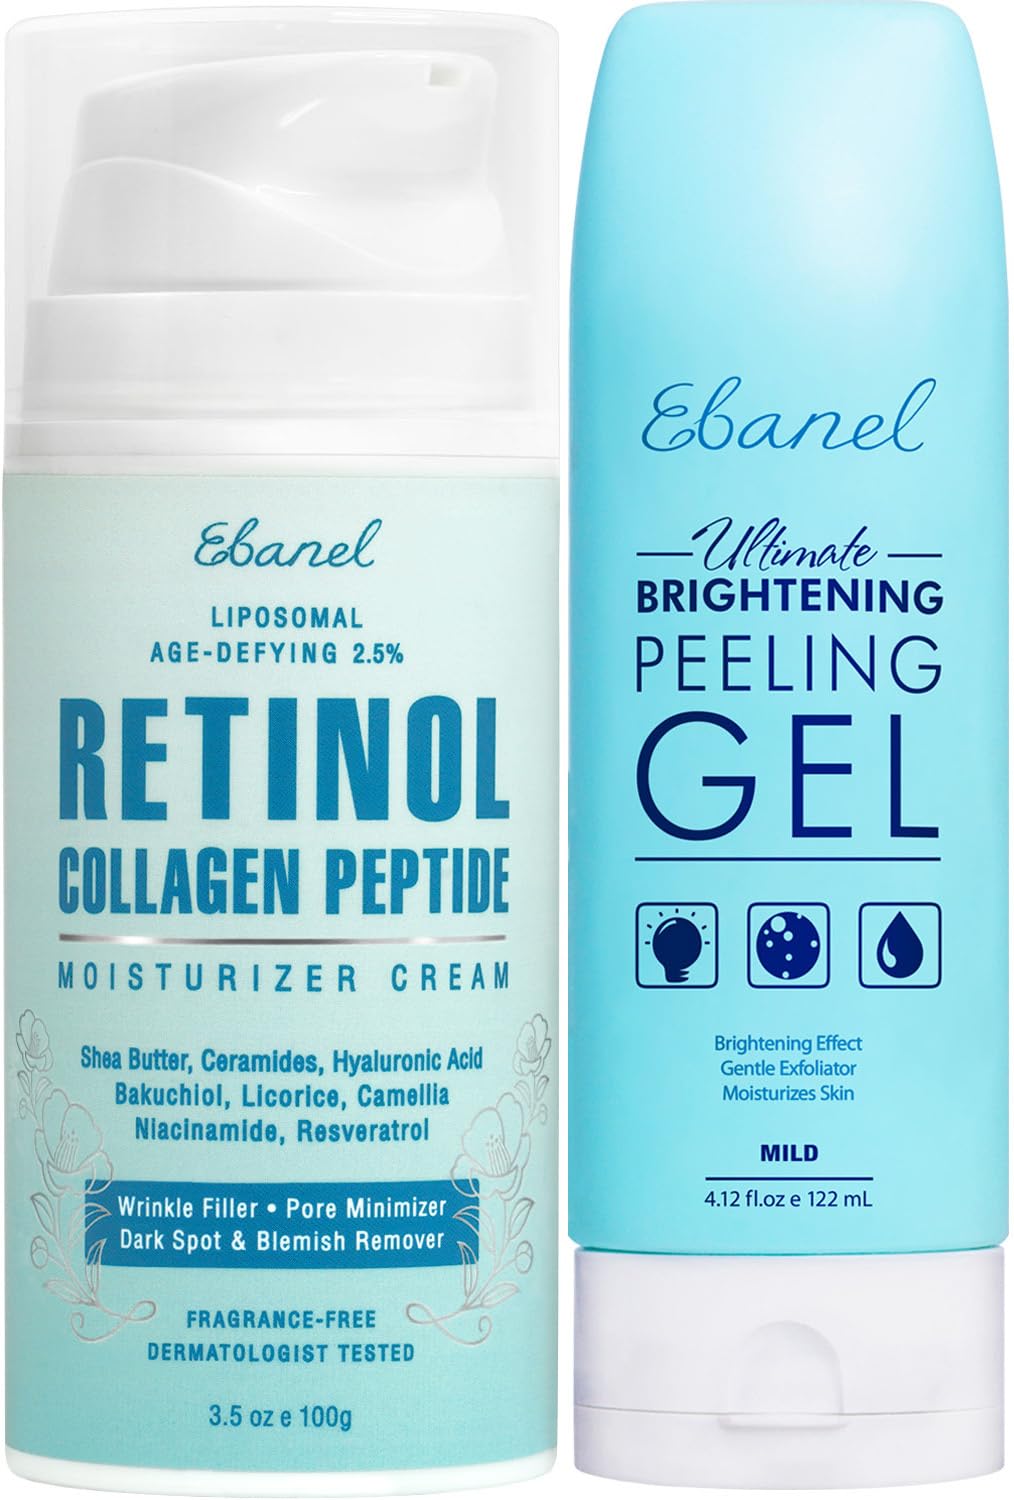 Ebanel Bundle of 2.5% Retinol Moisturizer, and Exfoliating Face Scrub Peeling Gel 4.12 Oz